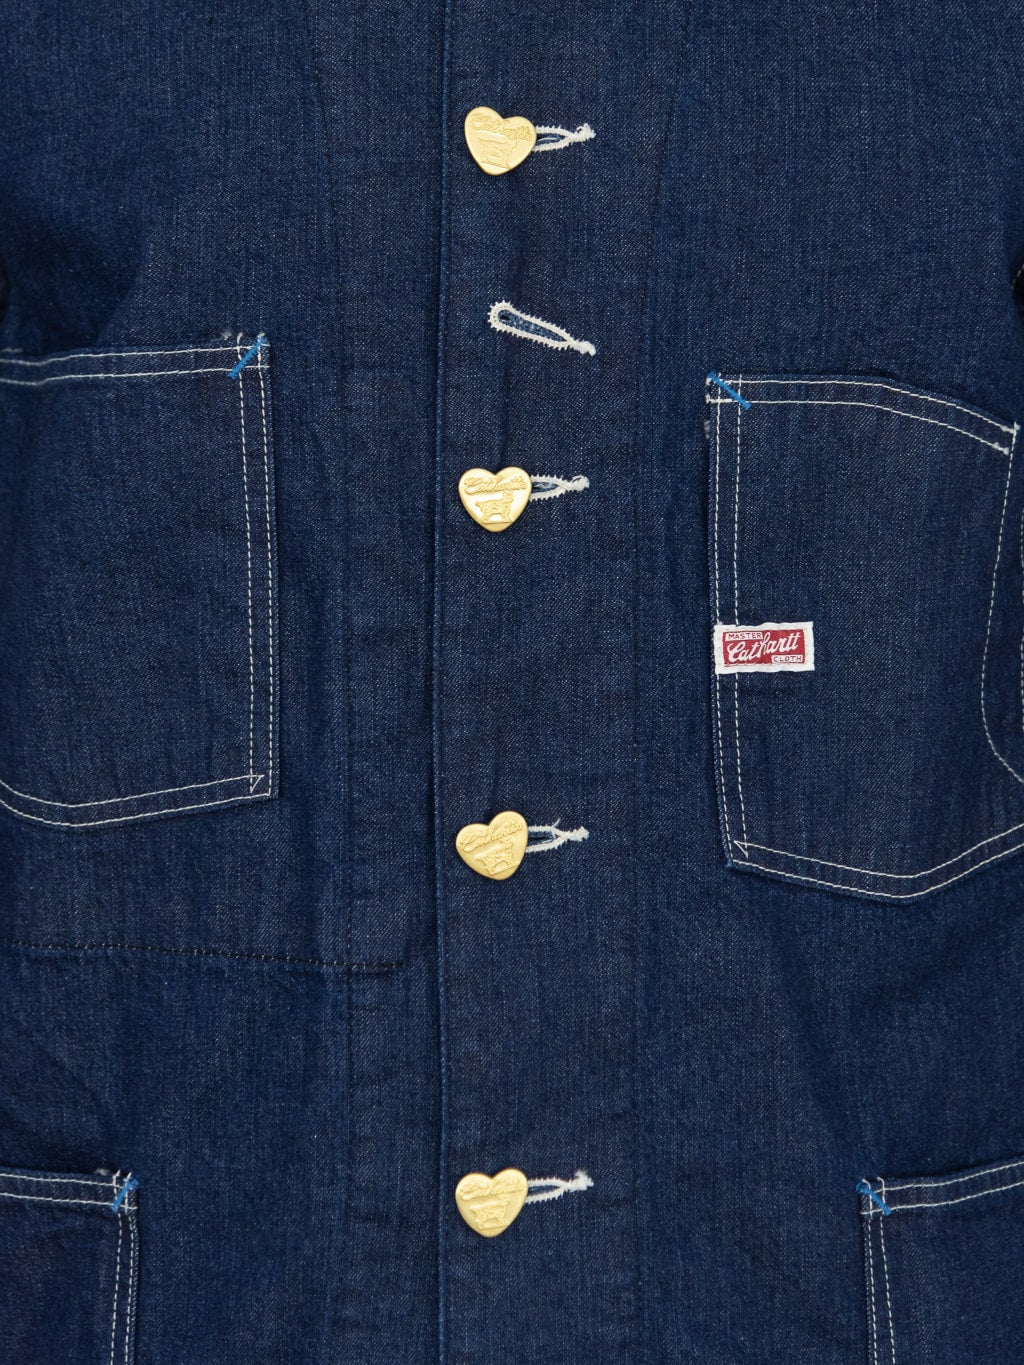 tcb cathartt Chore Coat 10oz denim heart shaped buttons